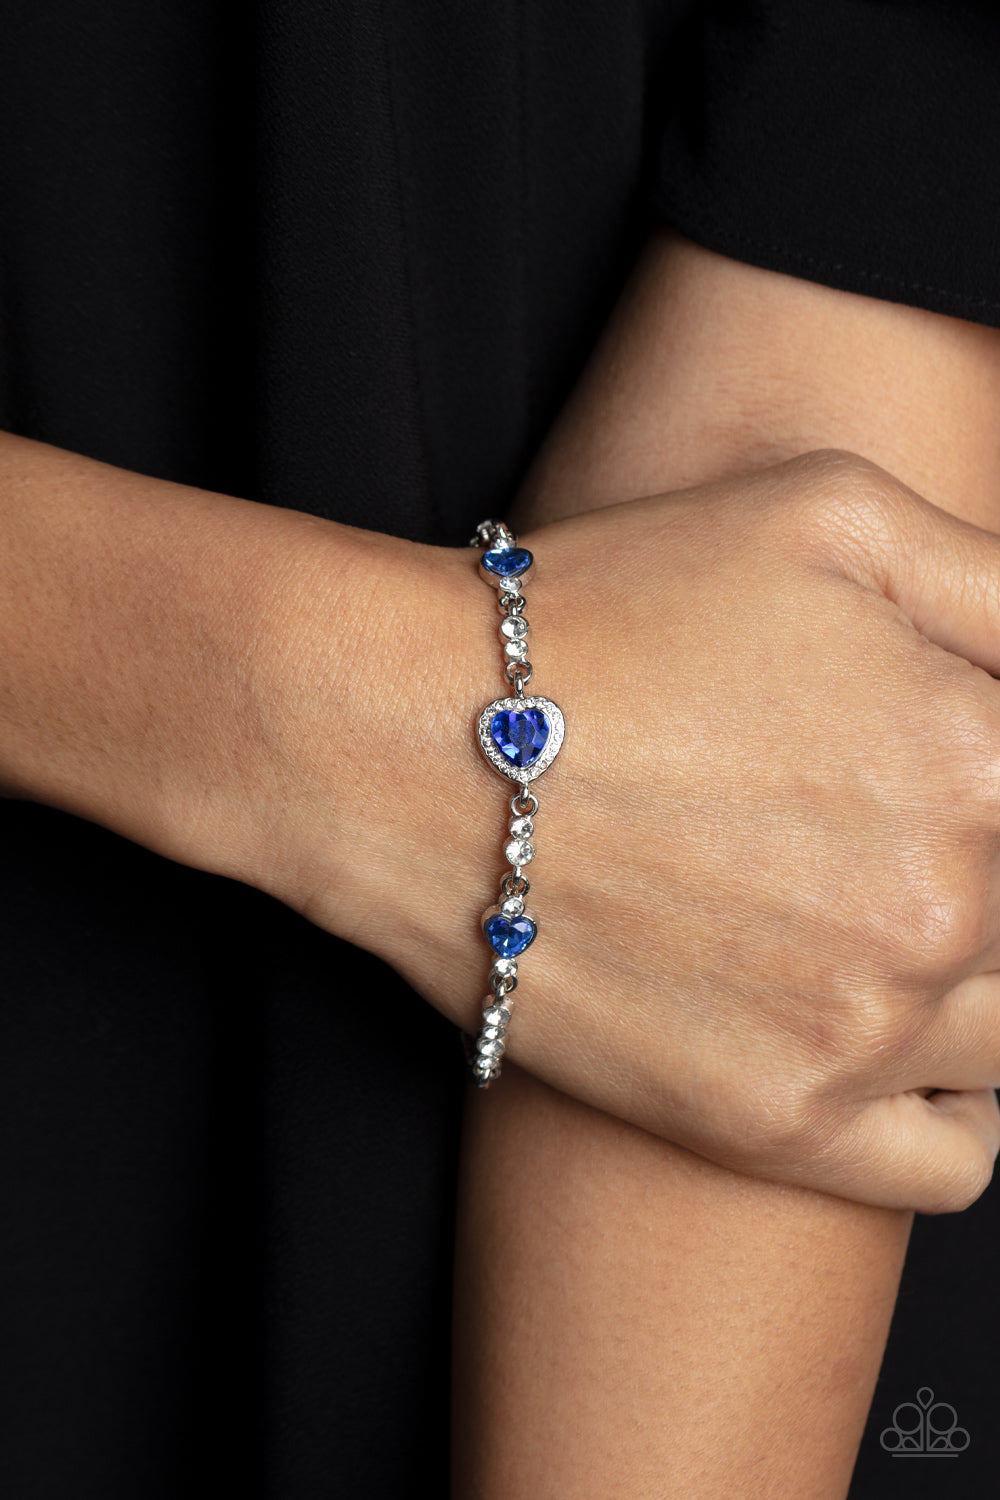 Amor Actually - Blue Bracelet